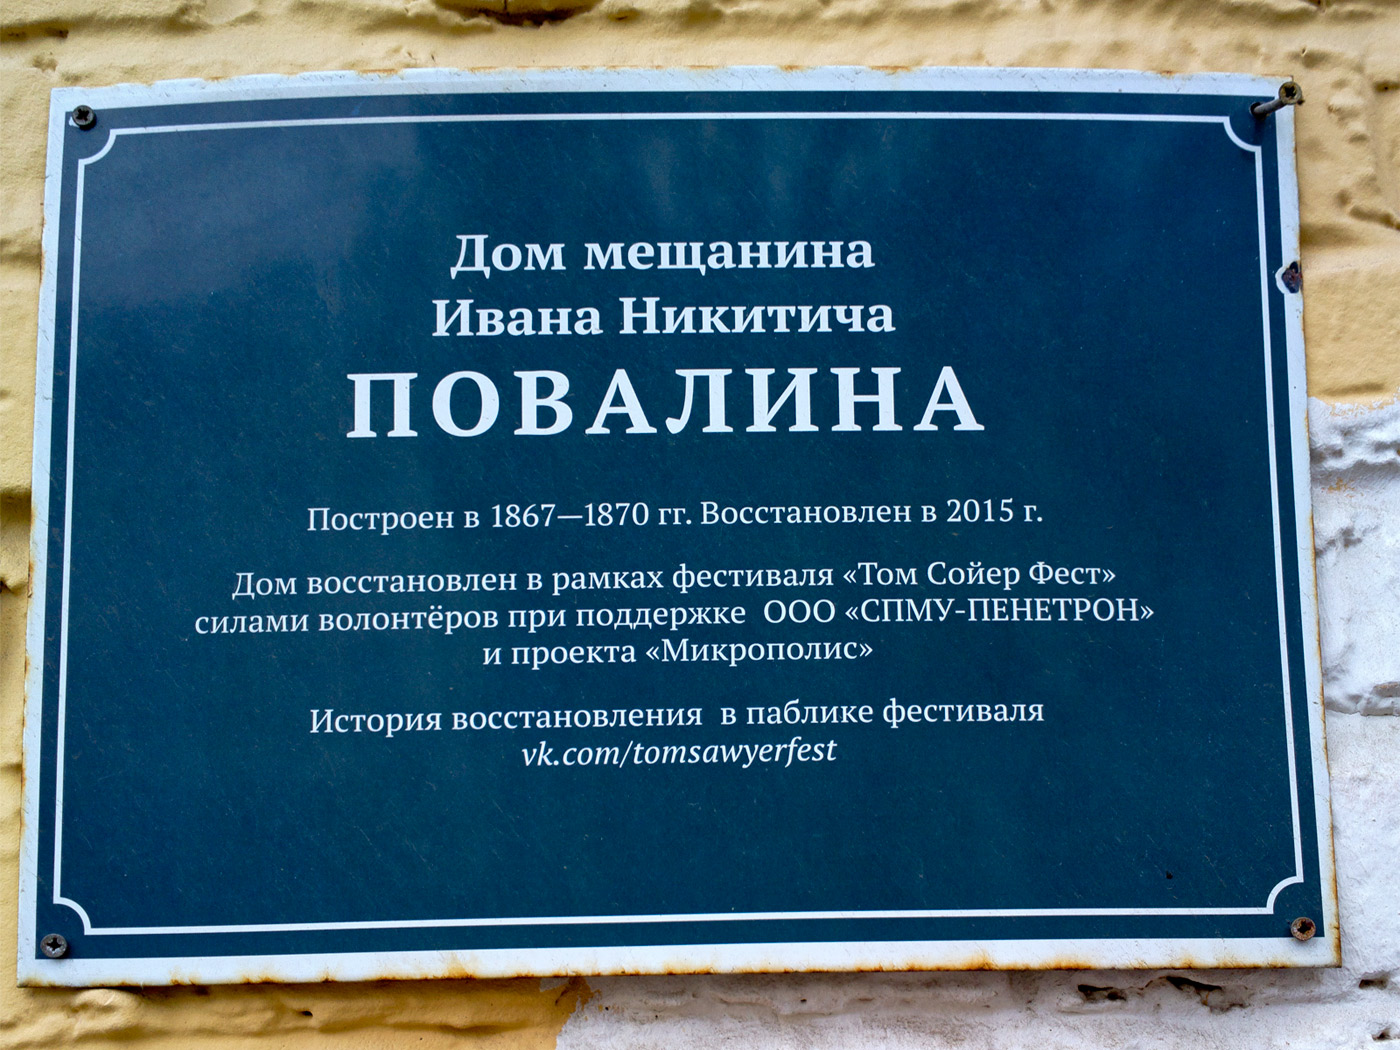 Samara, Улица Льва Толстого, 38. Samara — Memorial plaques